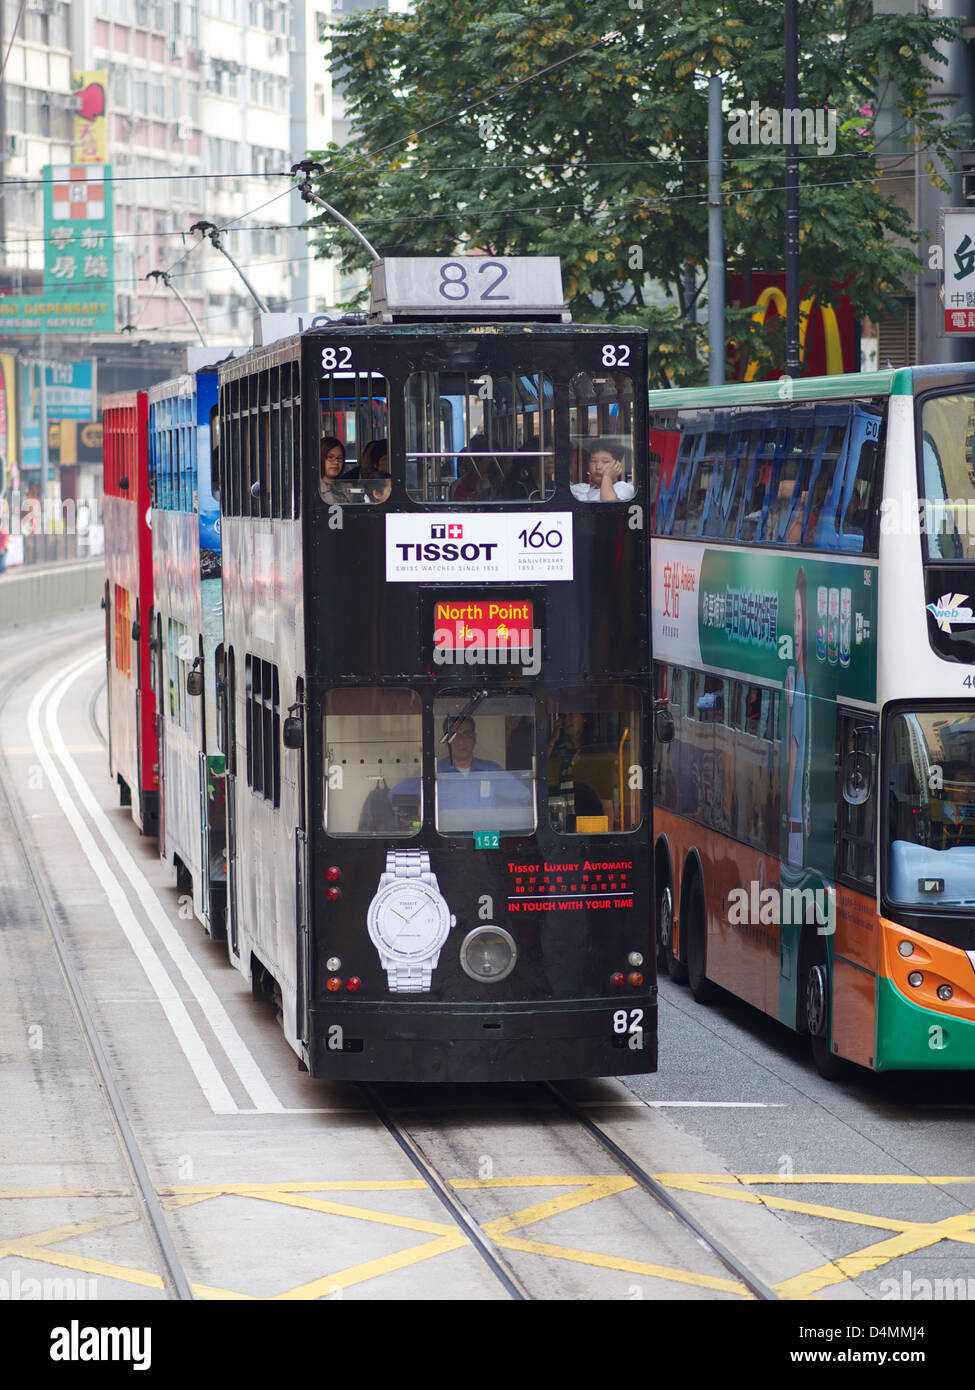 Public transportation in Hong Kong Stock Photo